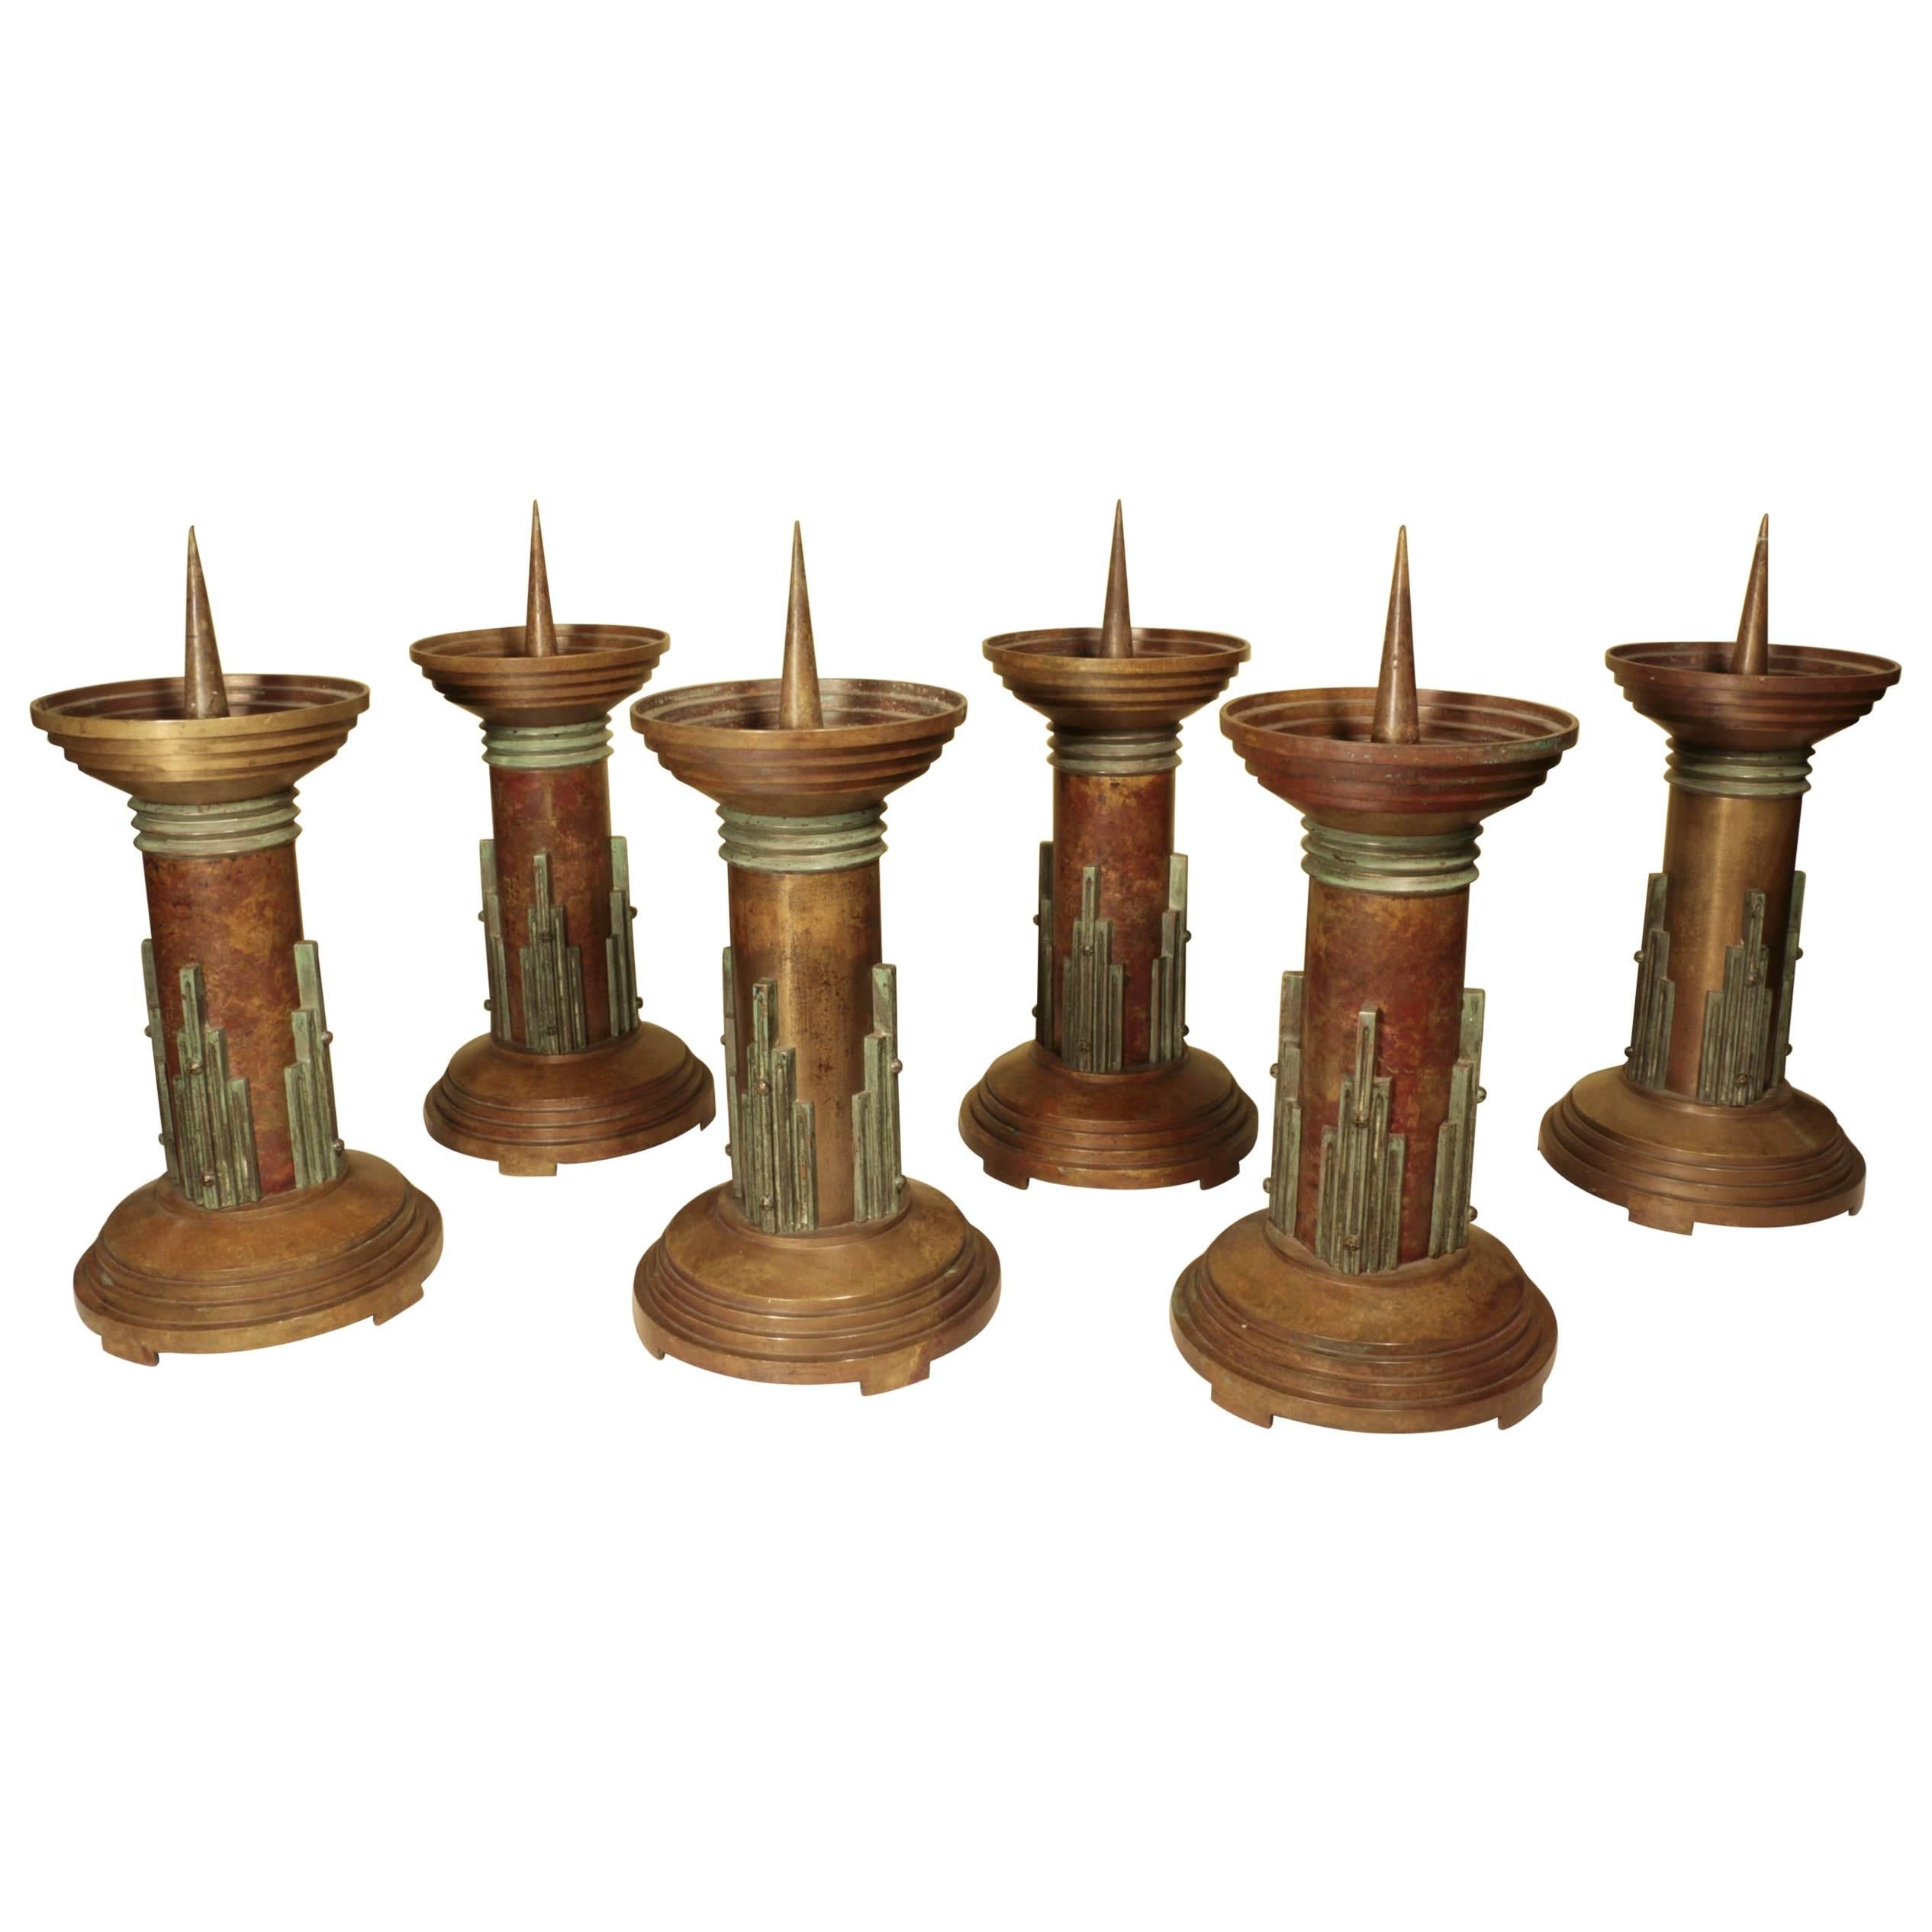 A Rare Set of Six Art Deco Bonze Pricket Candlesticks